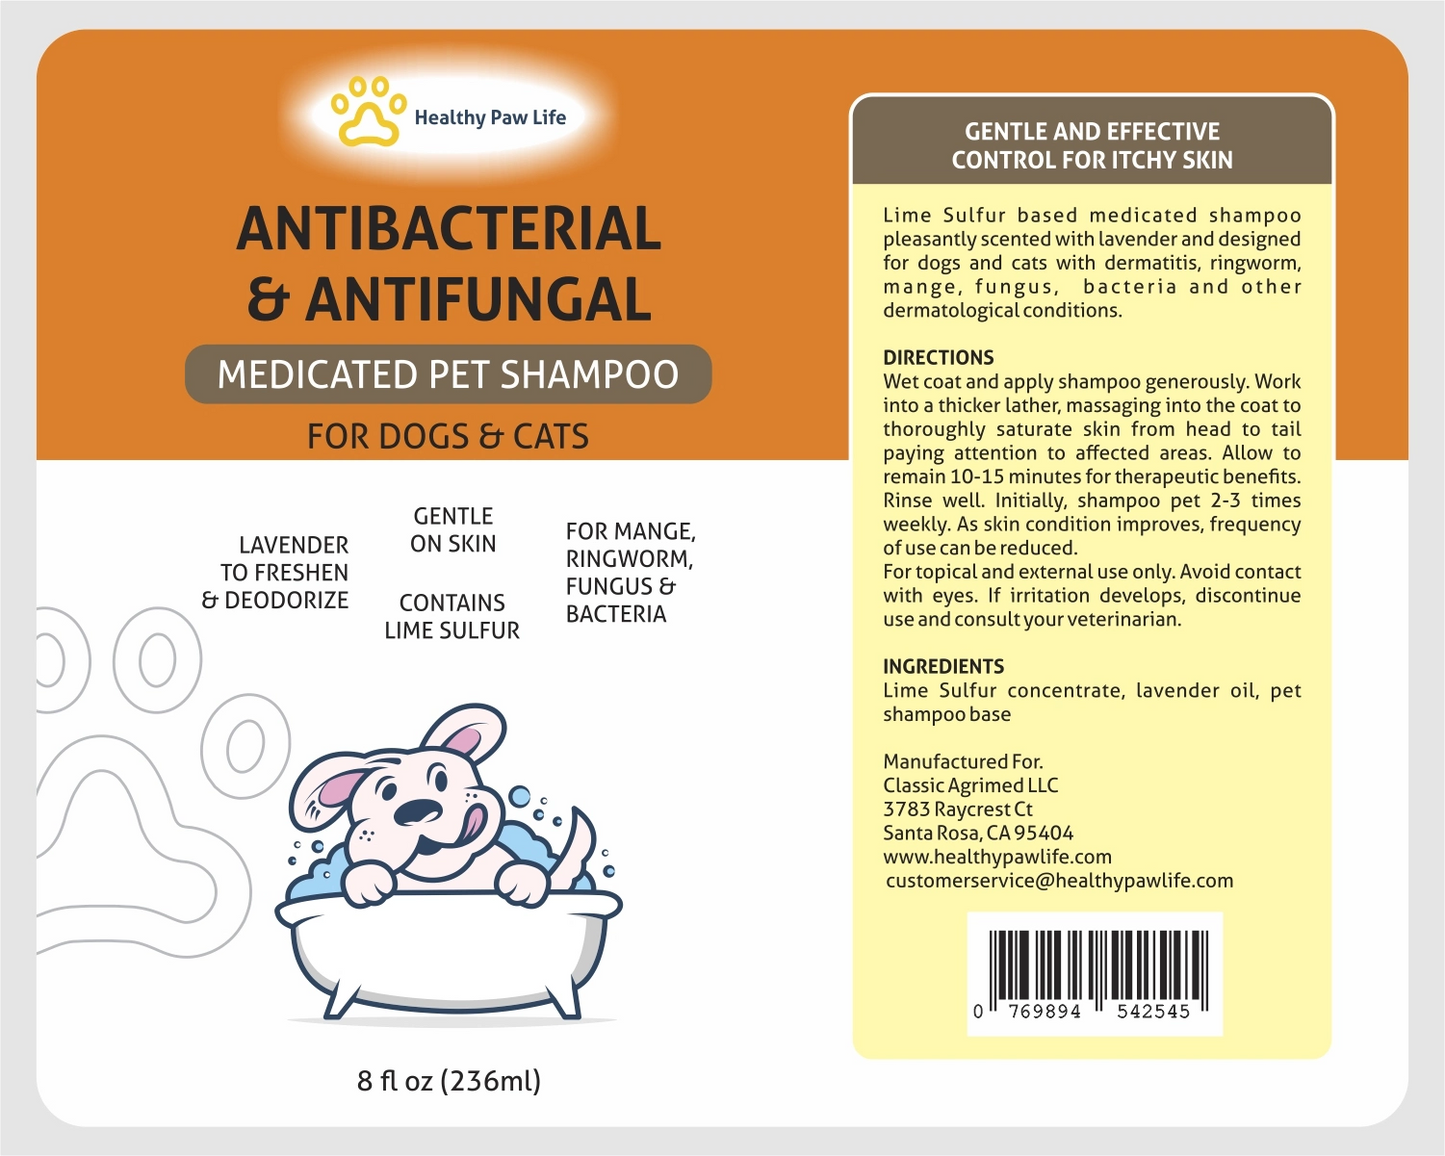 Lime Sulfur Pet Shampoo Pet Care